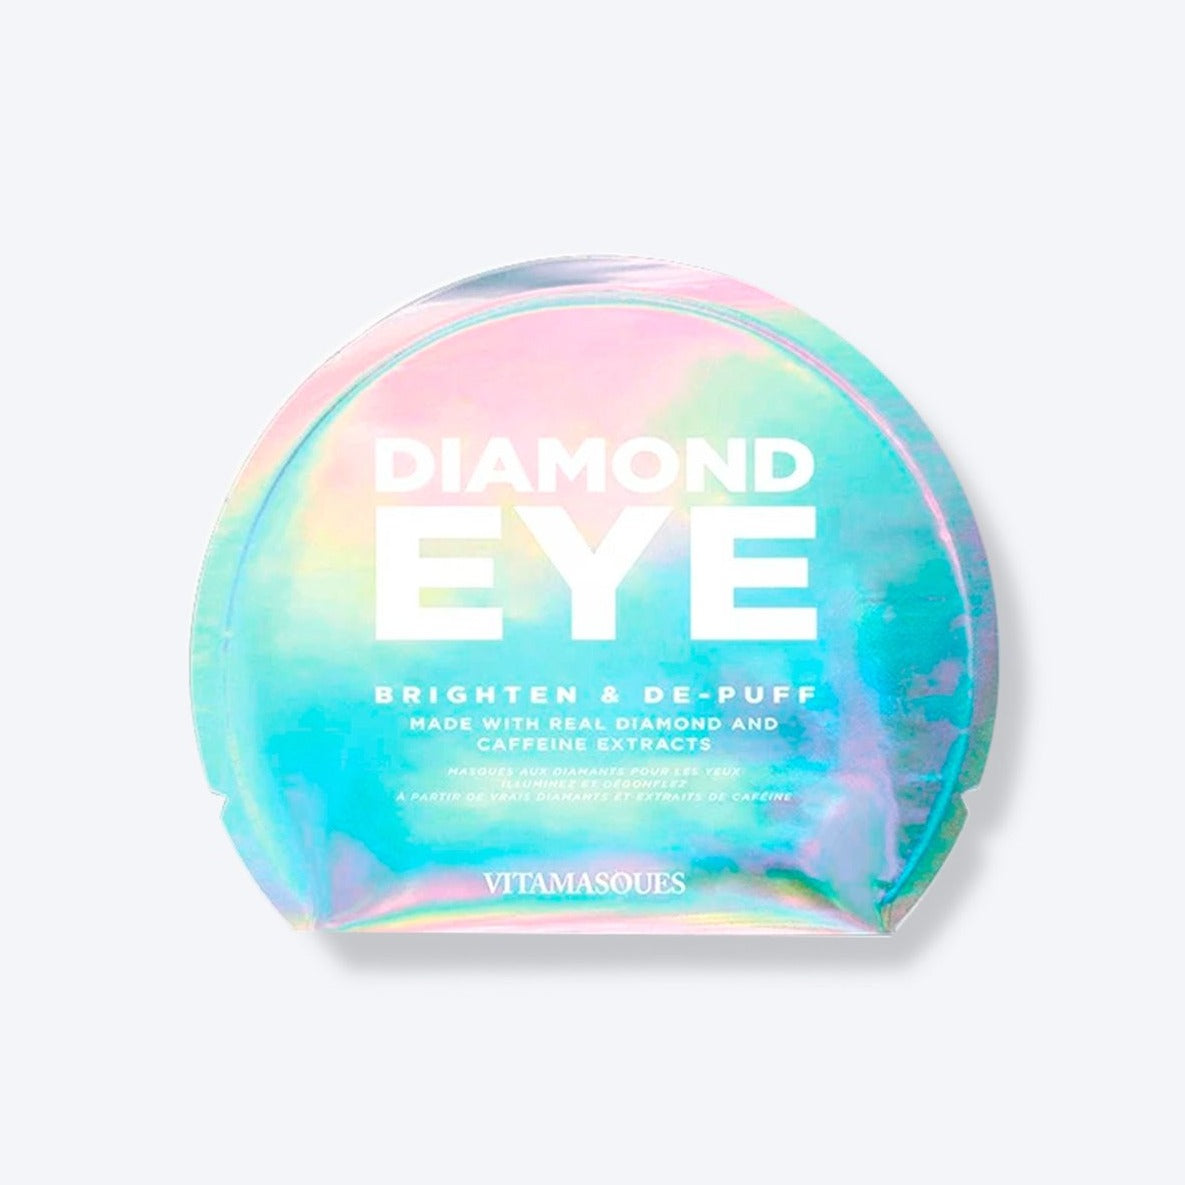 Circular iridescent packing of Diamond eye gels.